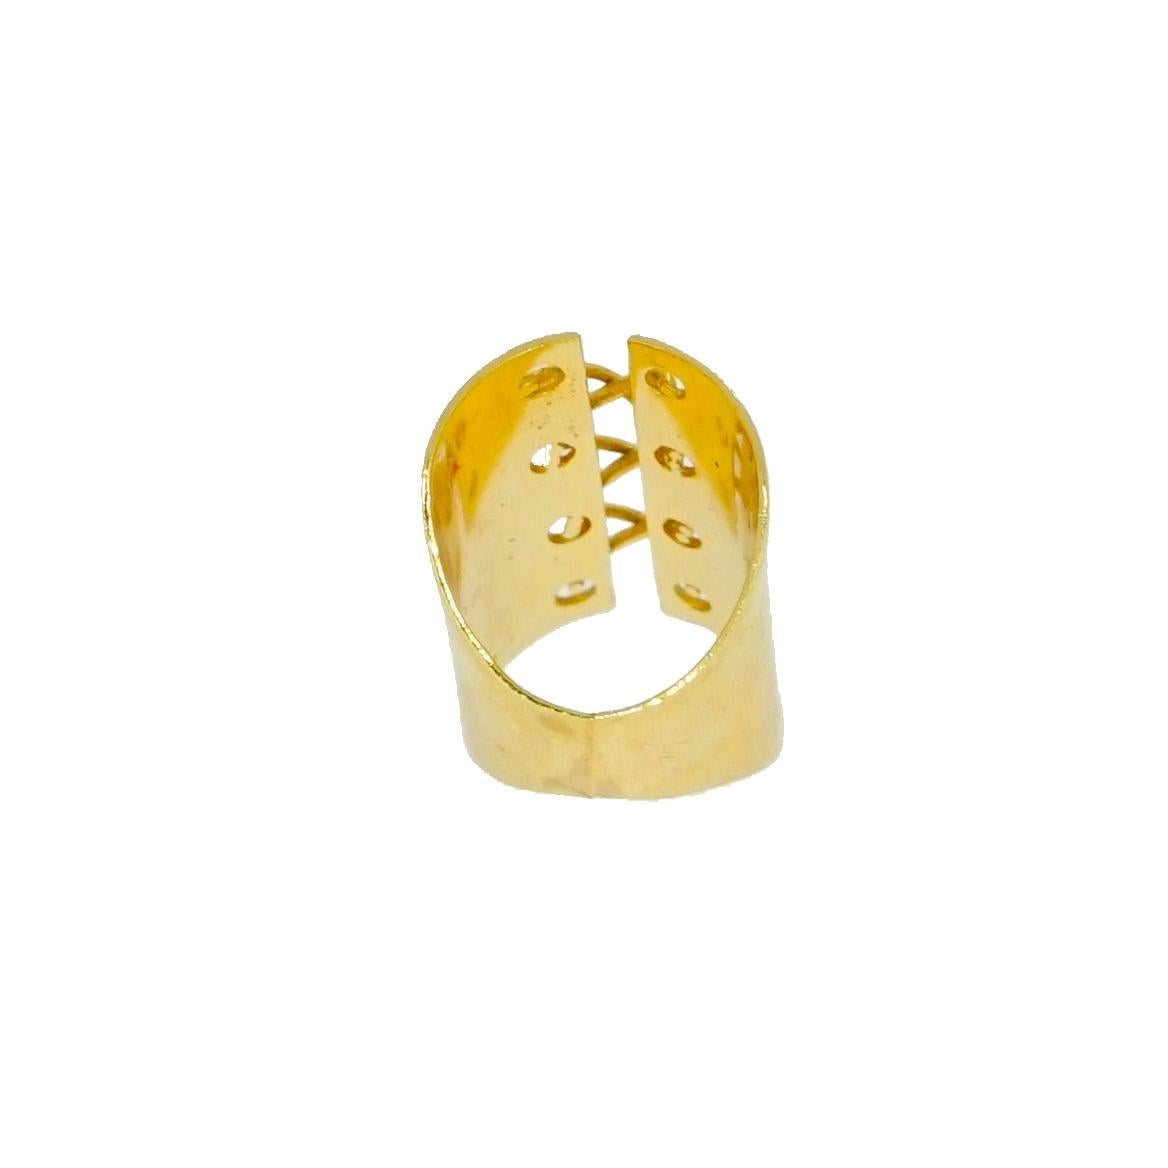 Artist Corset Design Wide Yellow Gold Ring